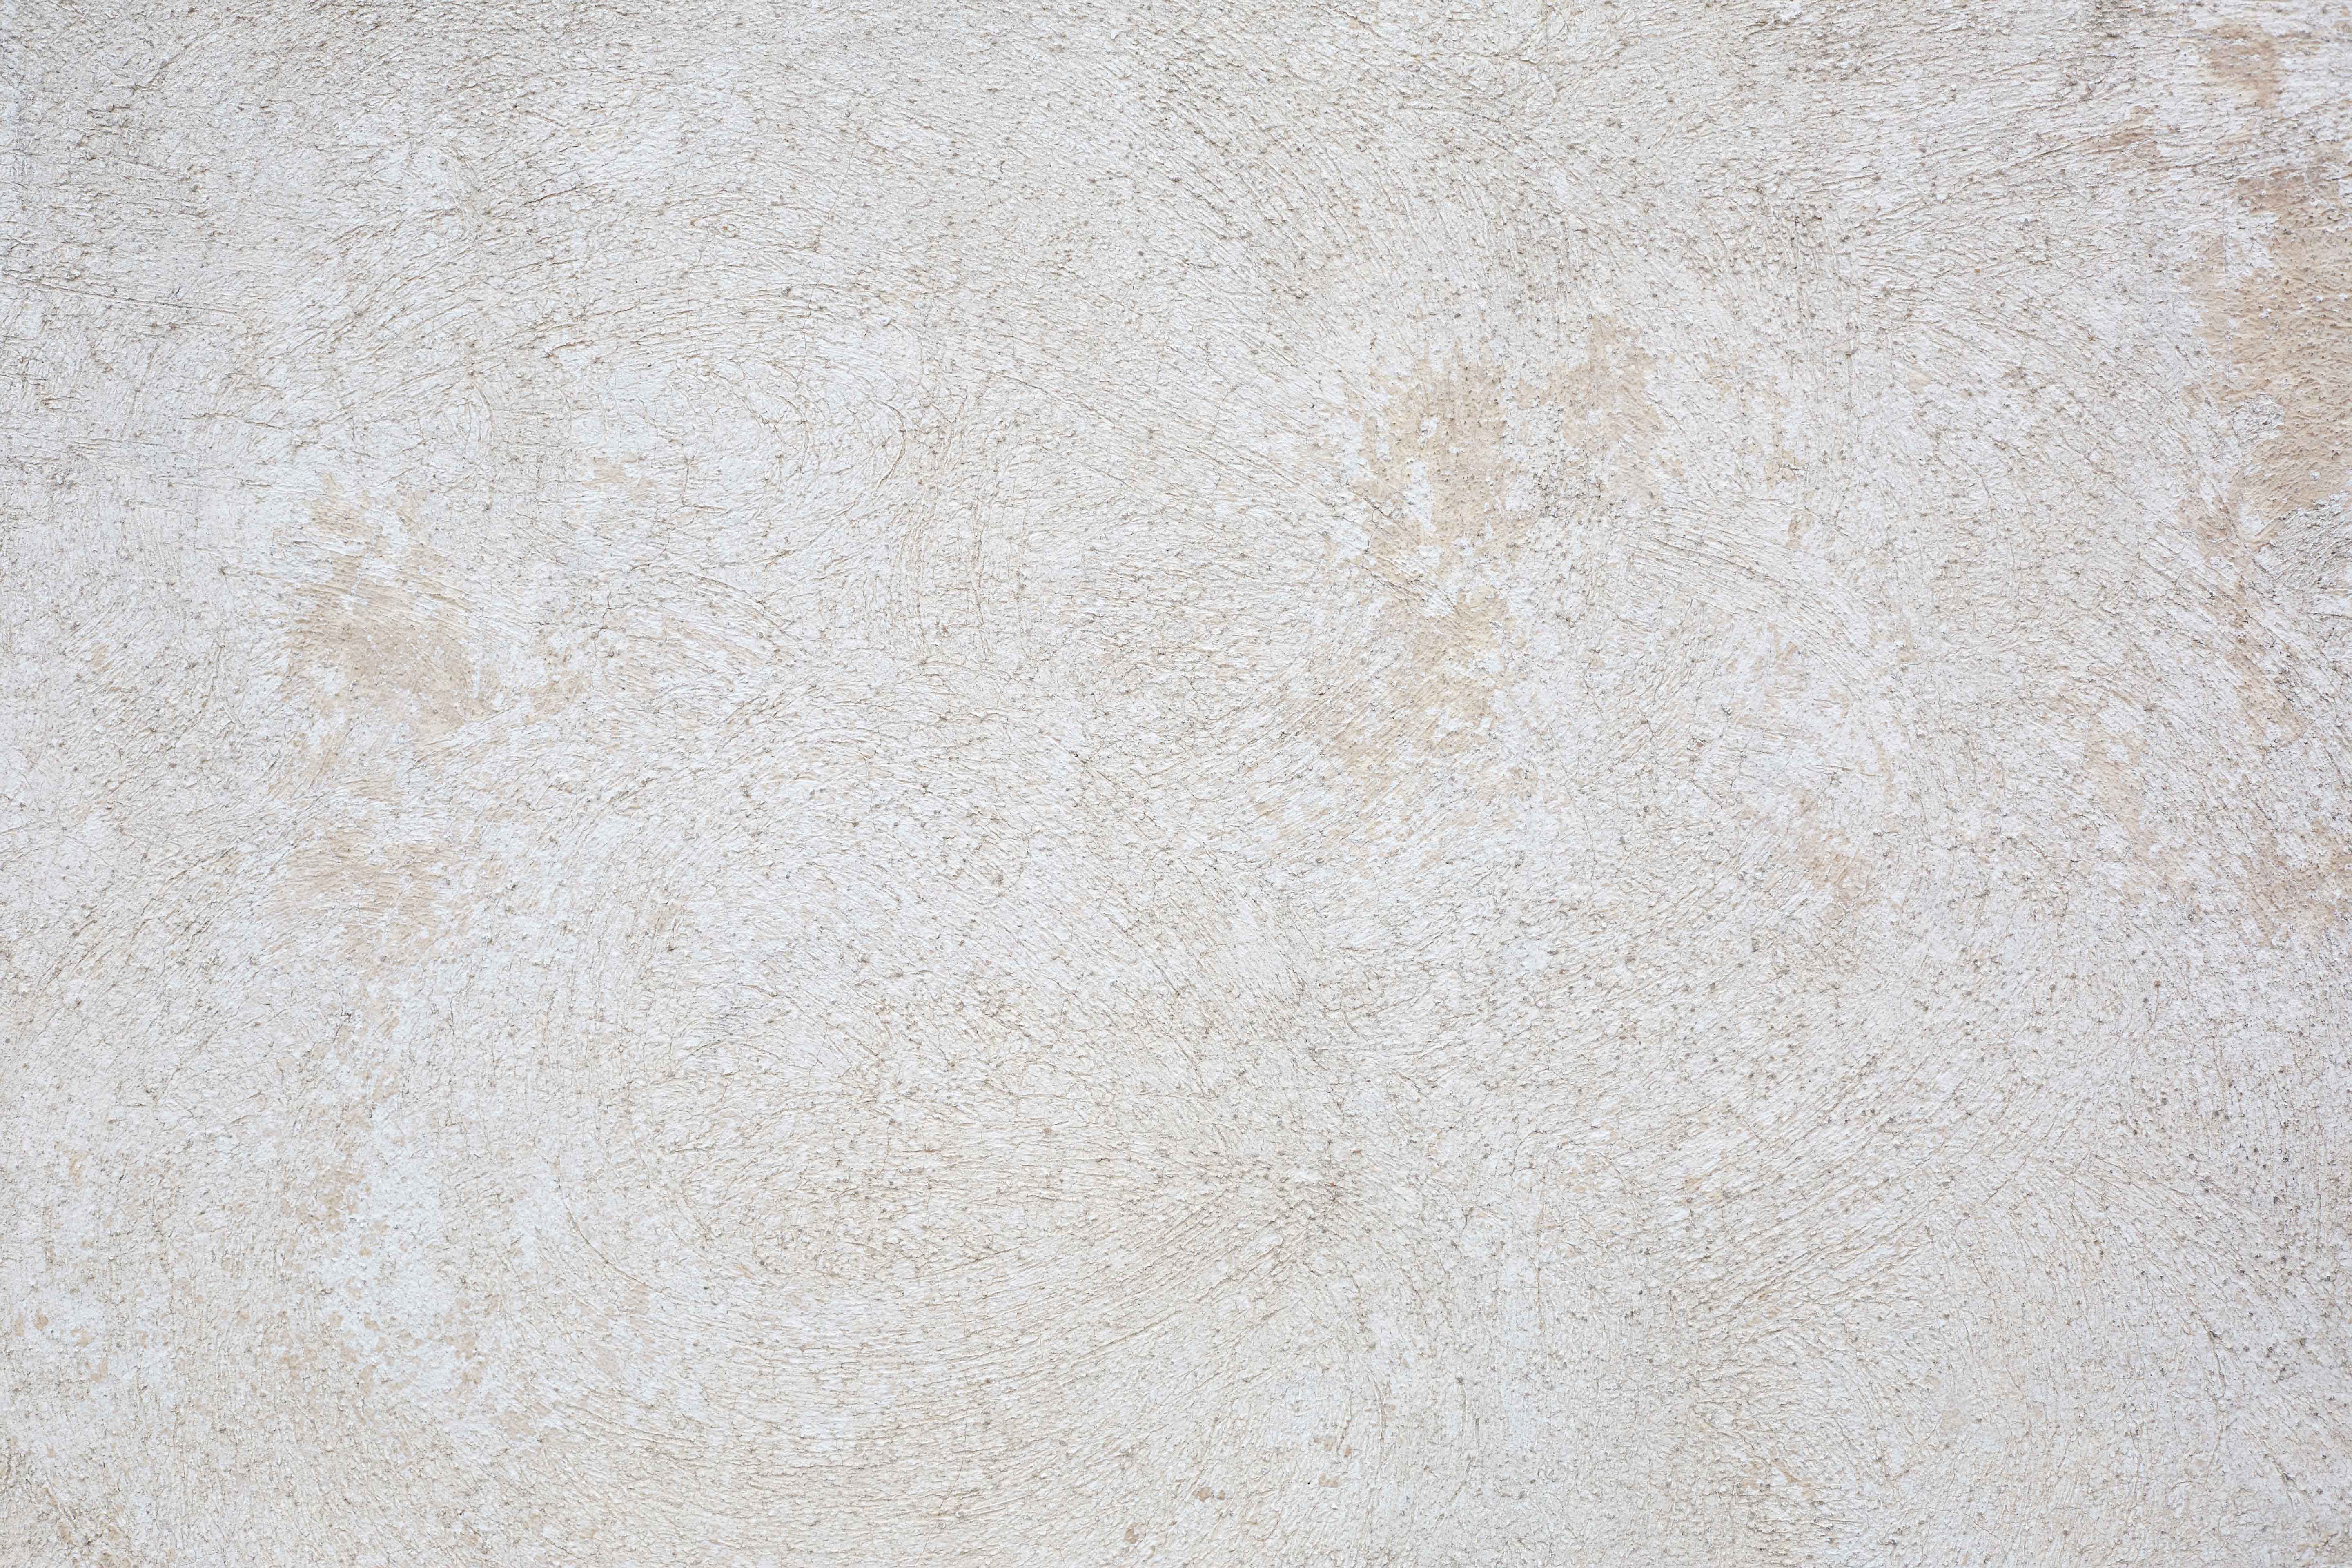 r122-white-beige-cement-wall-texture-background-2021-08-29-13-13-10-utc-copy.jpg